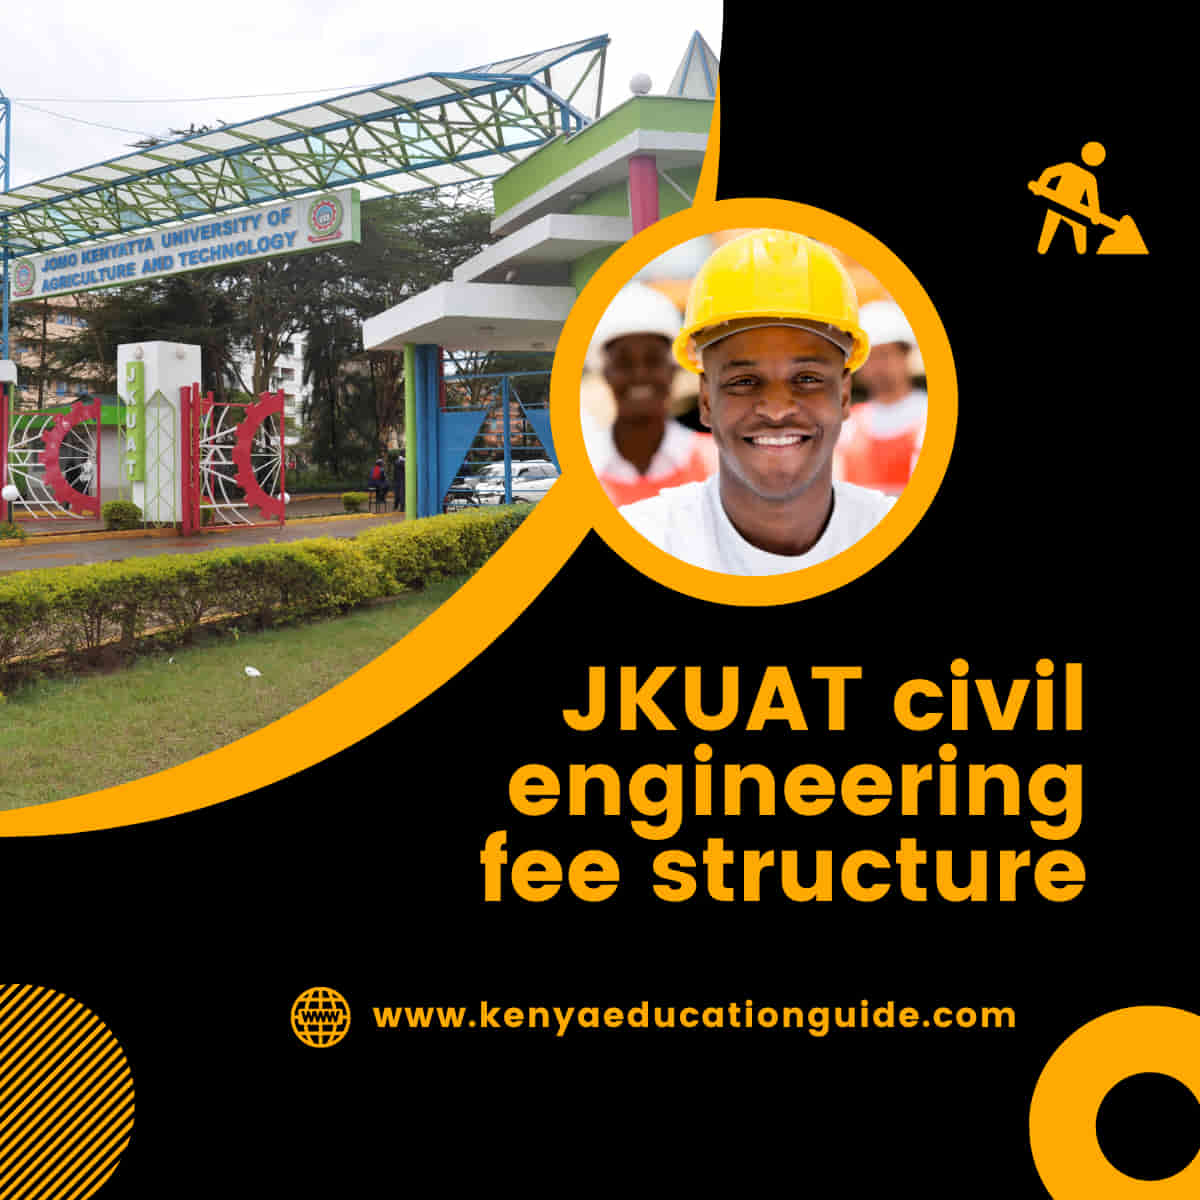 JKUAT civil engineering fee structure